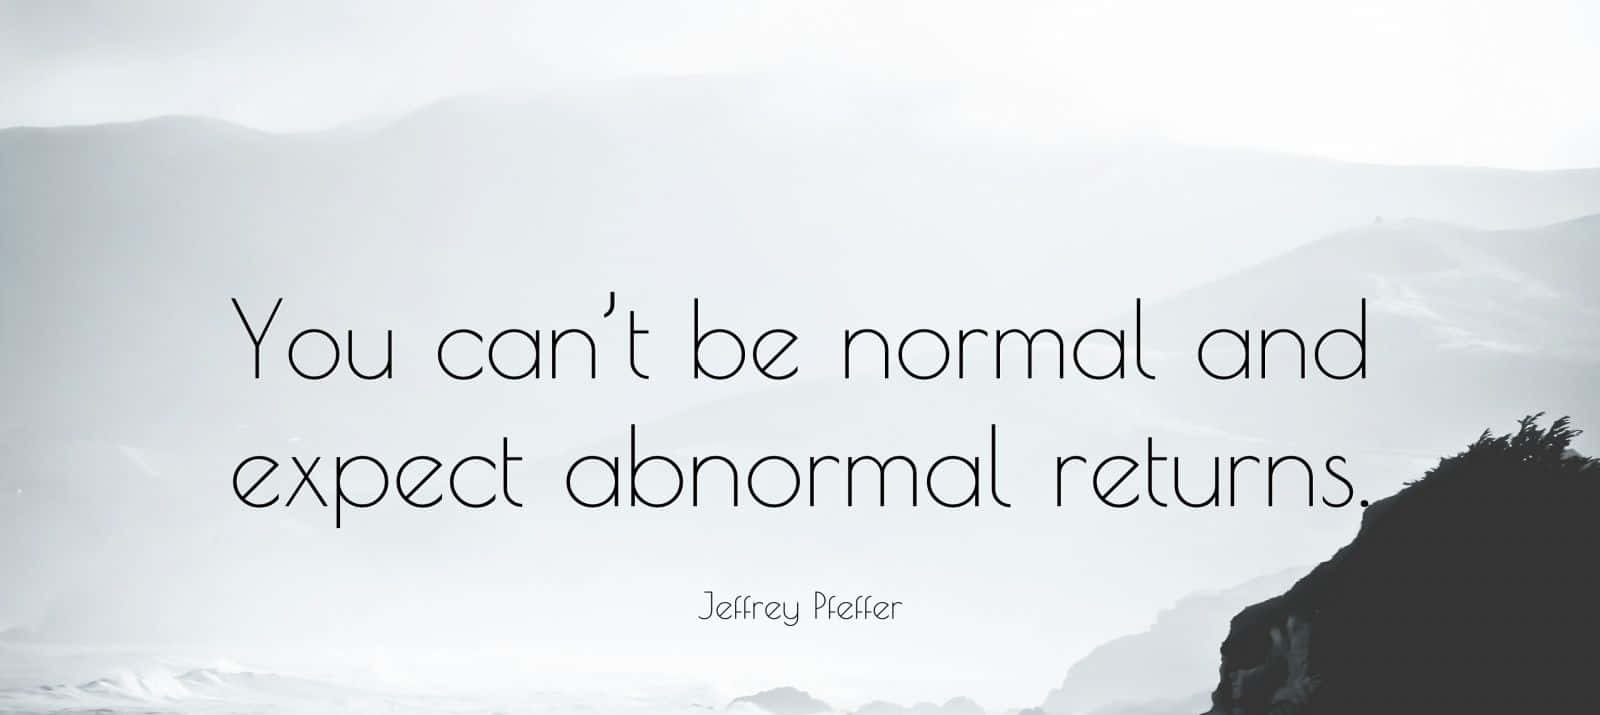 Abnormal Returns Quote Wallpaper